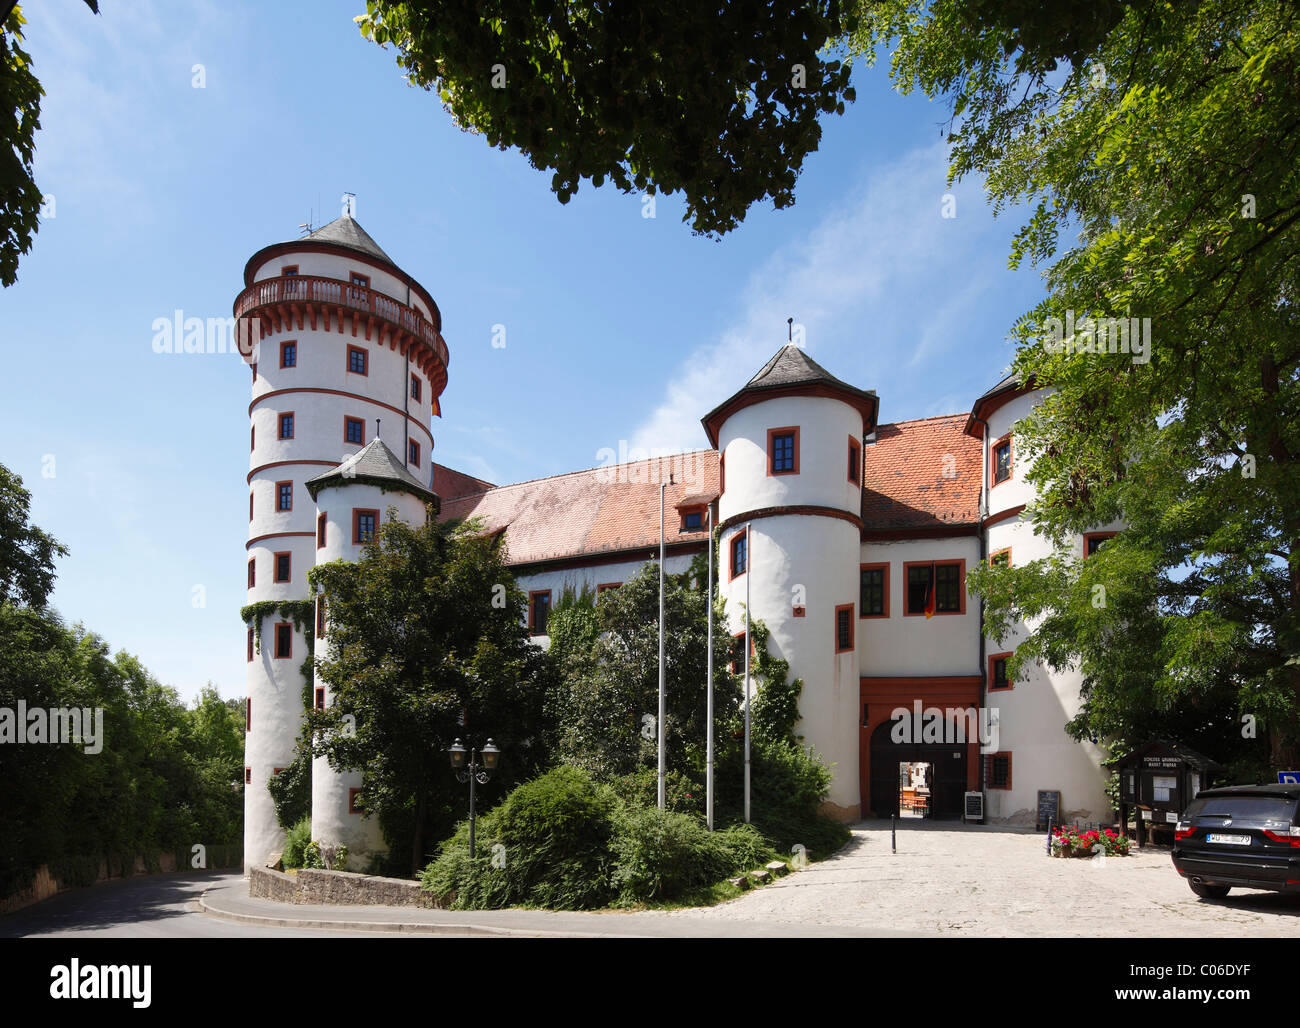 Schloss Rimpar Castle, Mainfranken, Lower Franconia, Franconia, Bavaria, Germany, Europe Stock Photo